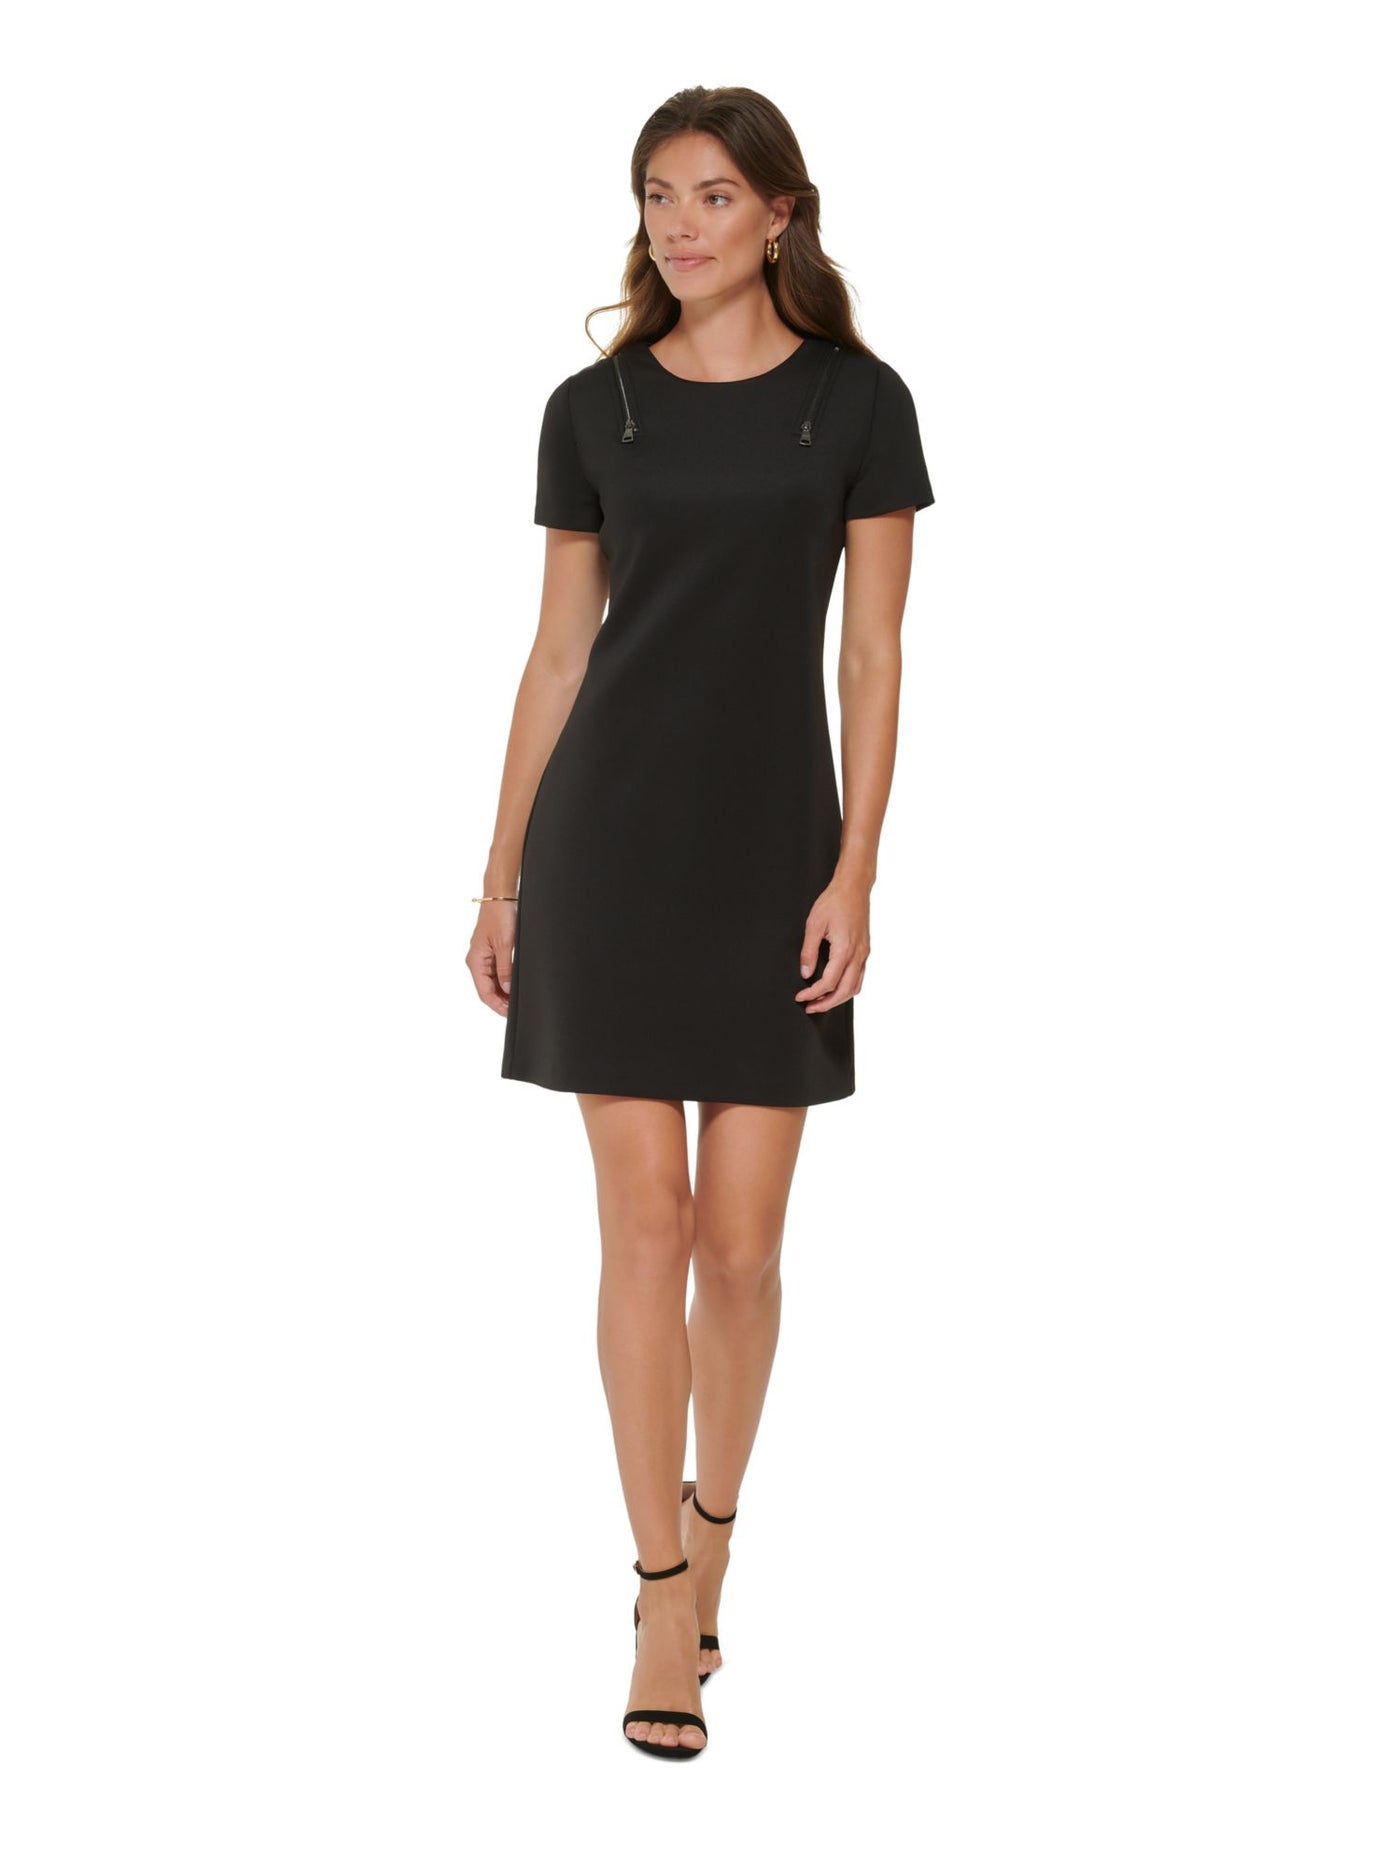 DKNY Womens Black Zippered Unlined Short Sleeve Round Neck Short Sheath Dress 4